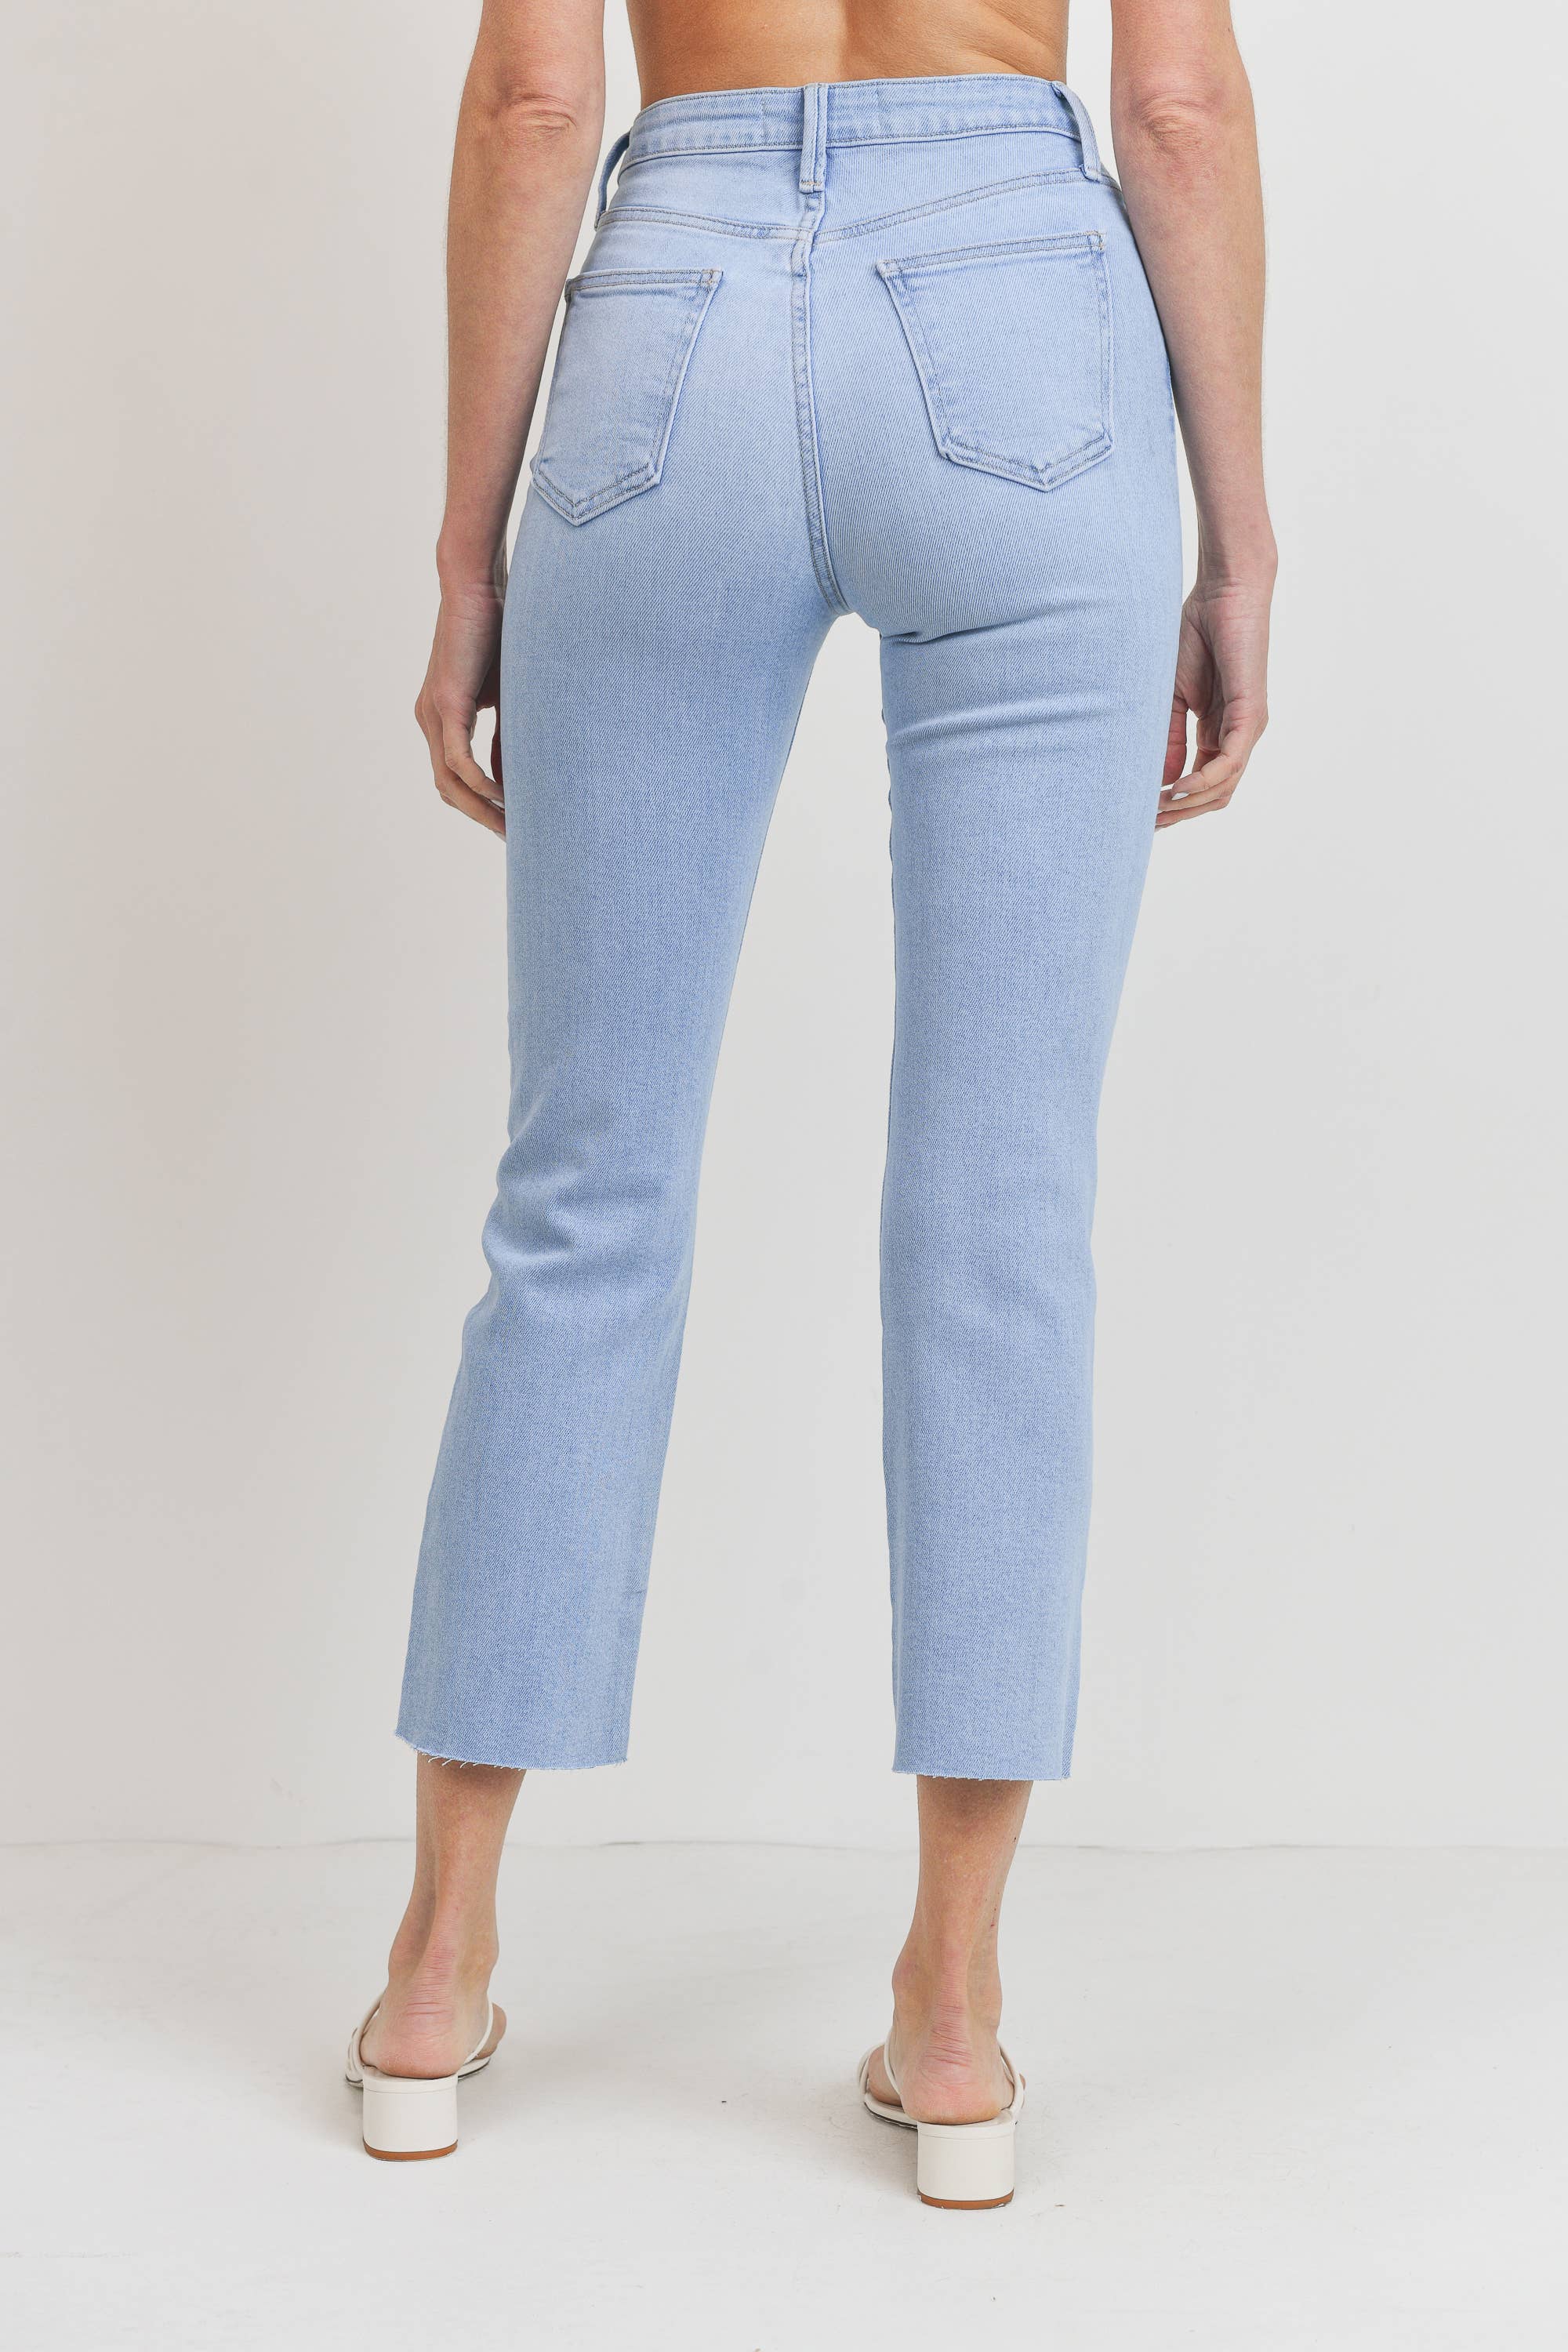 The Katy Vintage Slim Straight Jeans by Just Black Denim